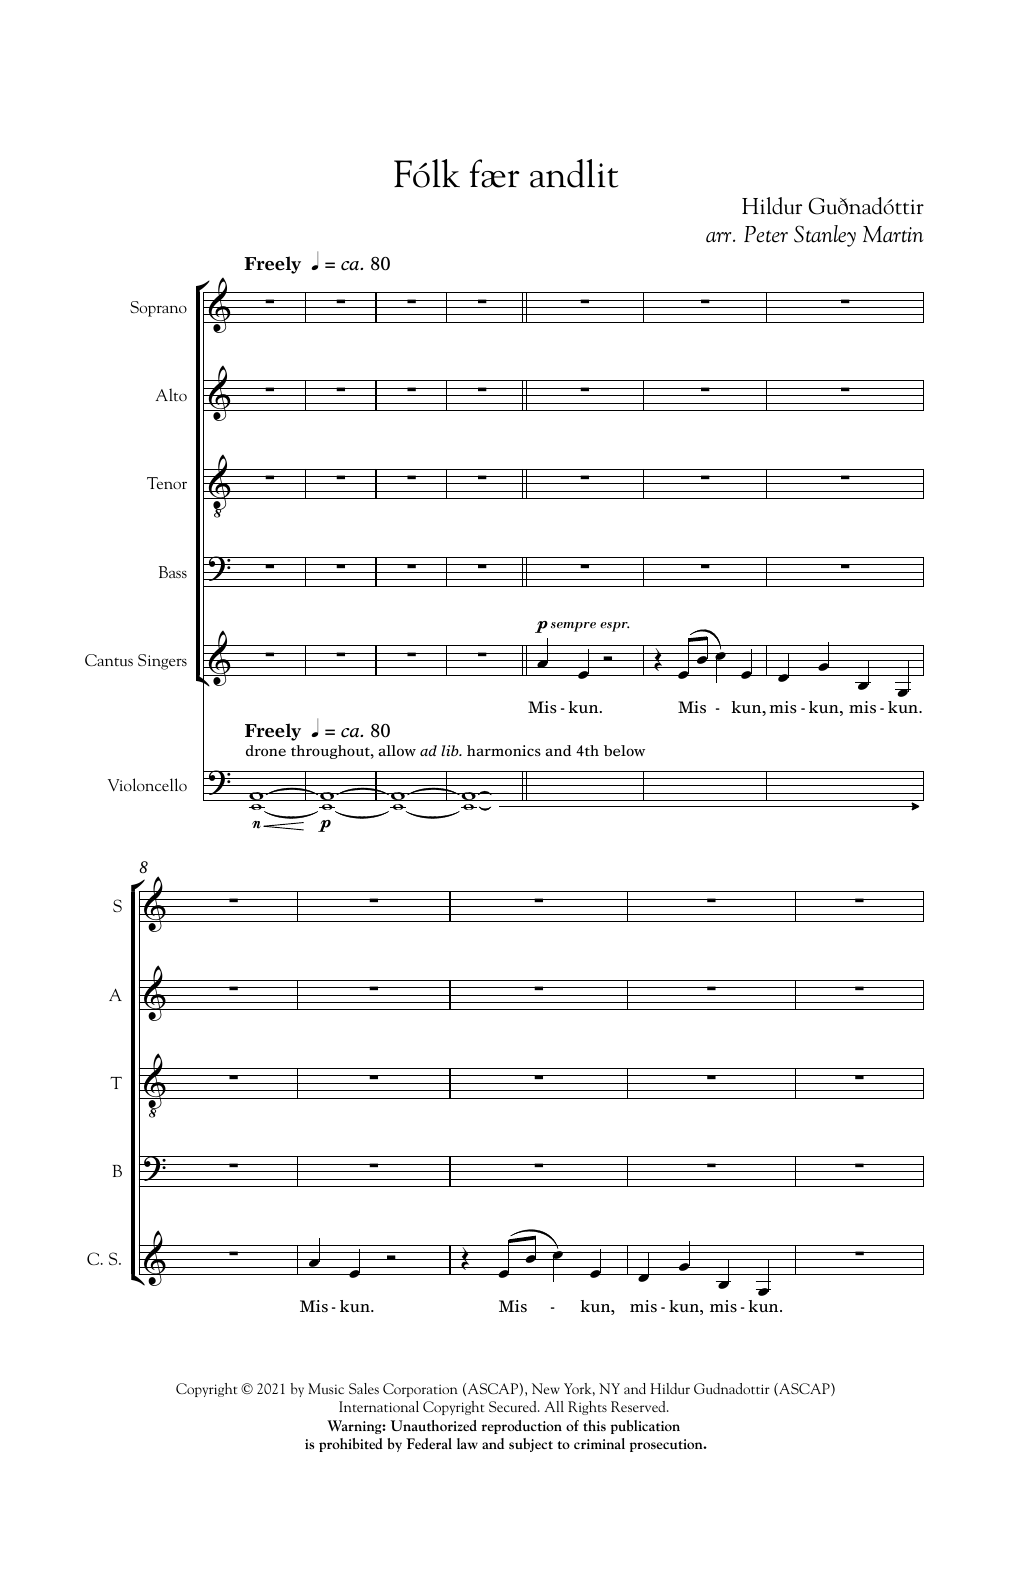 Download Hildur Gudnadottir Folk faer andlit (arr. Peter Stanley Martin) Sheet Music and learn how to play SATB Choir PDF digital score in minutes